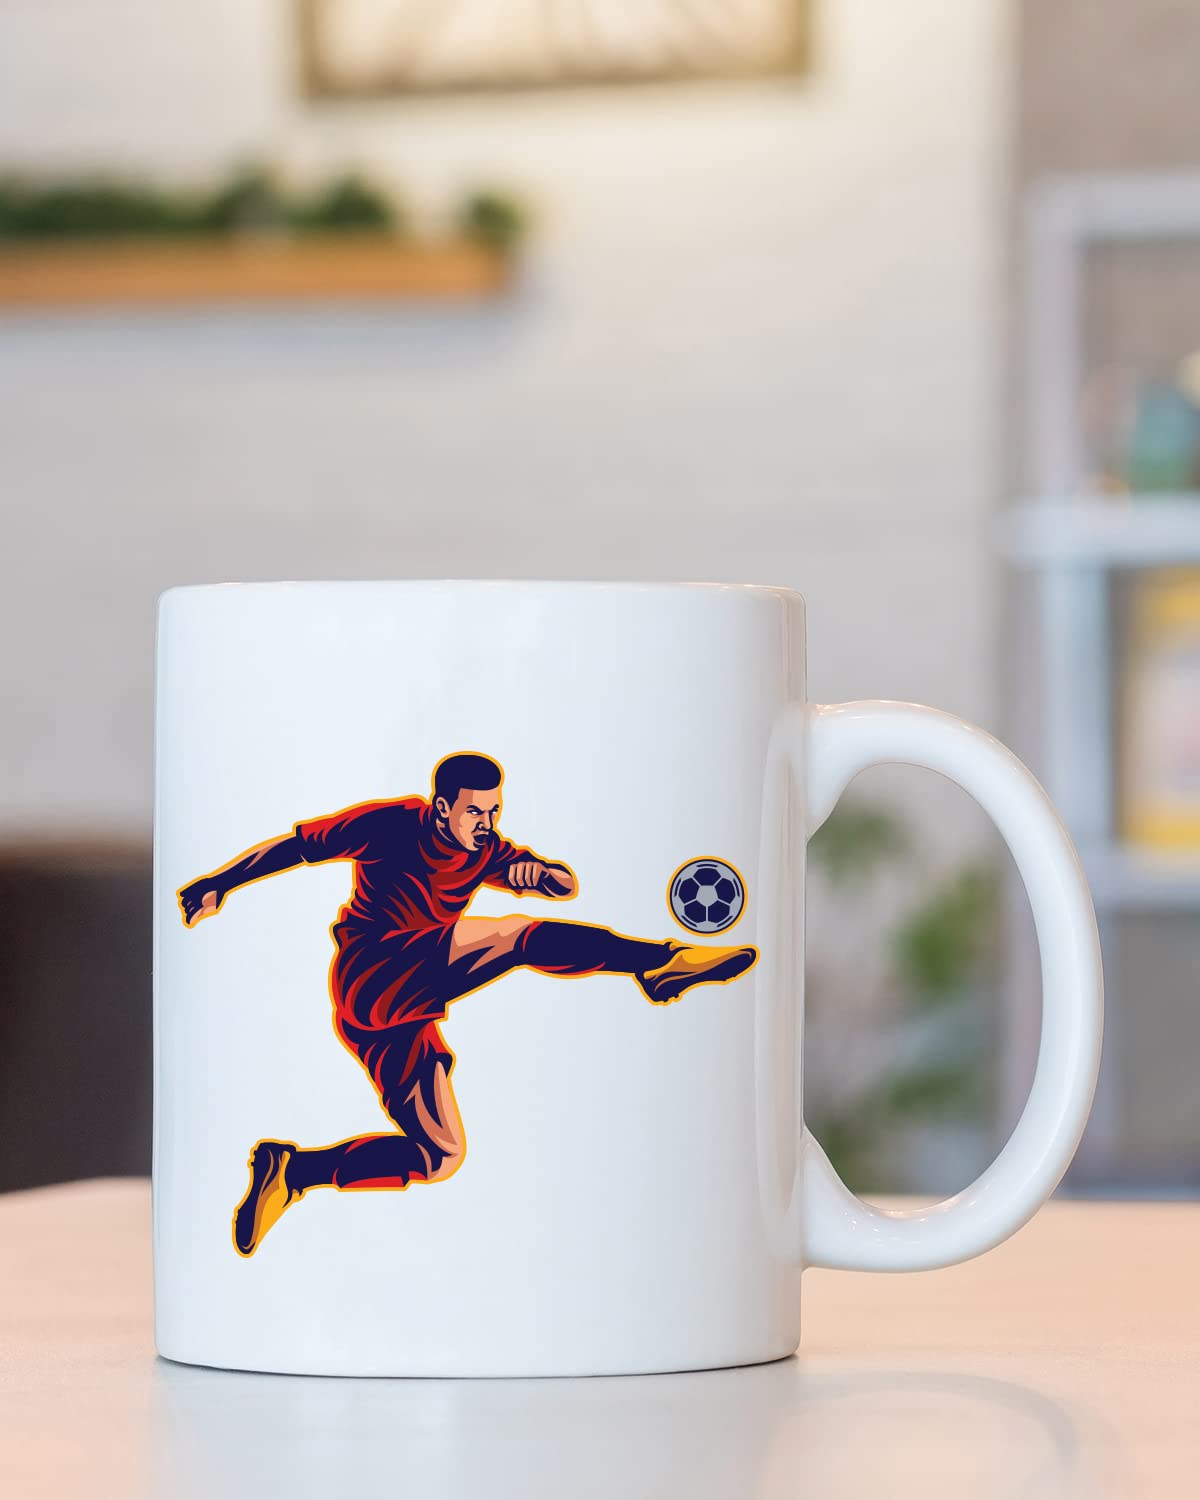 Football Ceramic Printed Coffee Mug - Unique Gifts For Football Lovers, Football Mugs, Gifts For Football Fans, Football Coffee Mug for Husband Boyfriend Birthday, Valentine's Day Football Gift